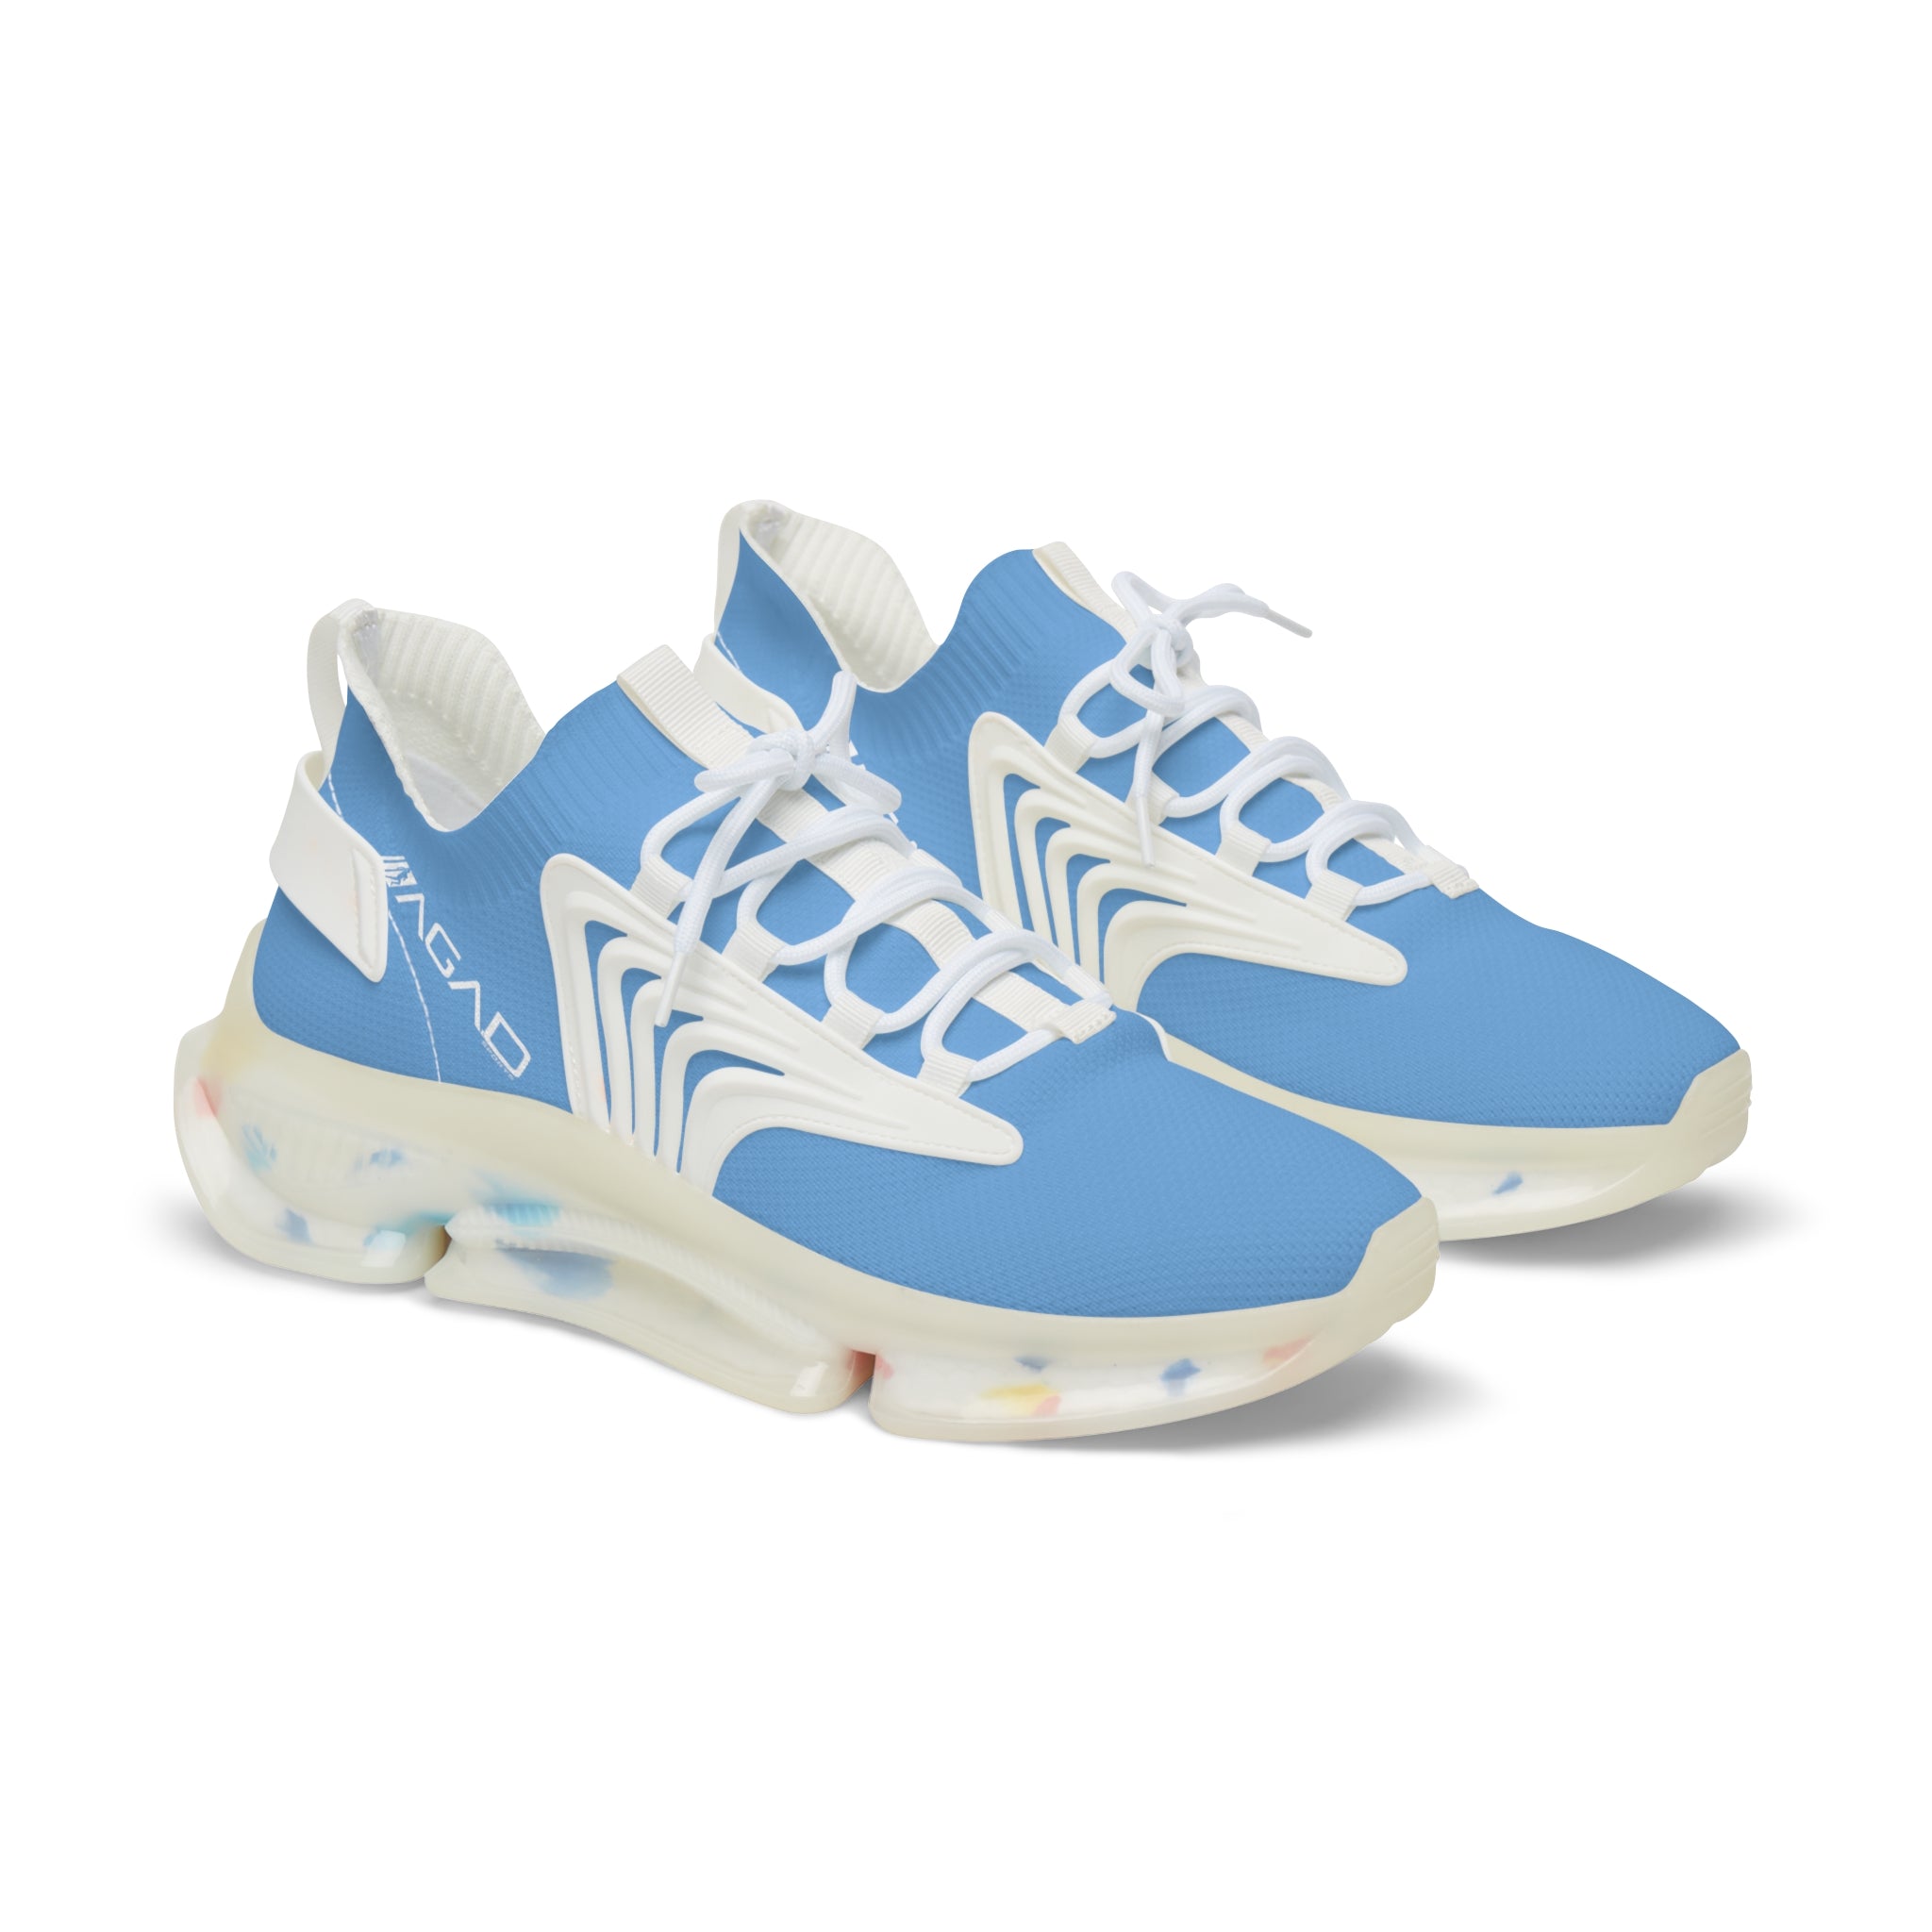 AGAD Sports Essential Men's Running Shoe